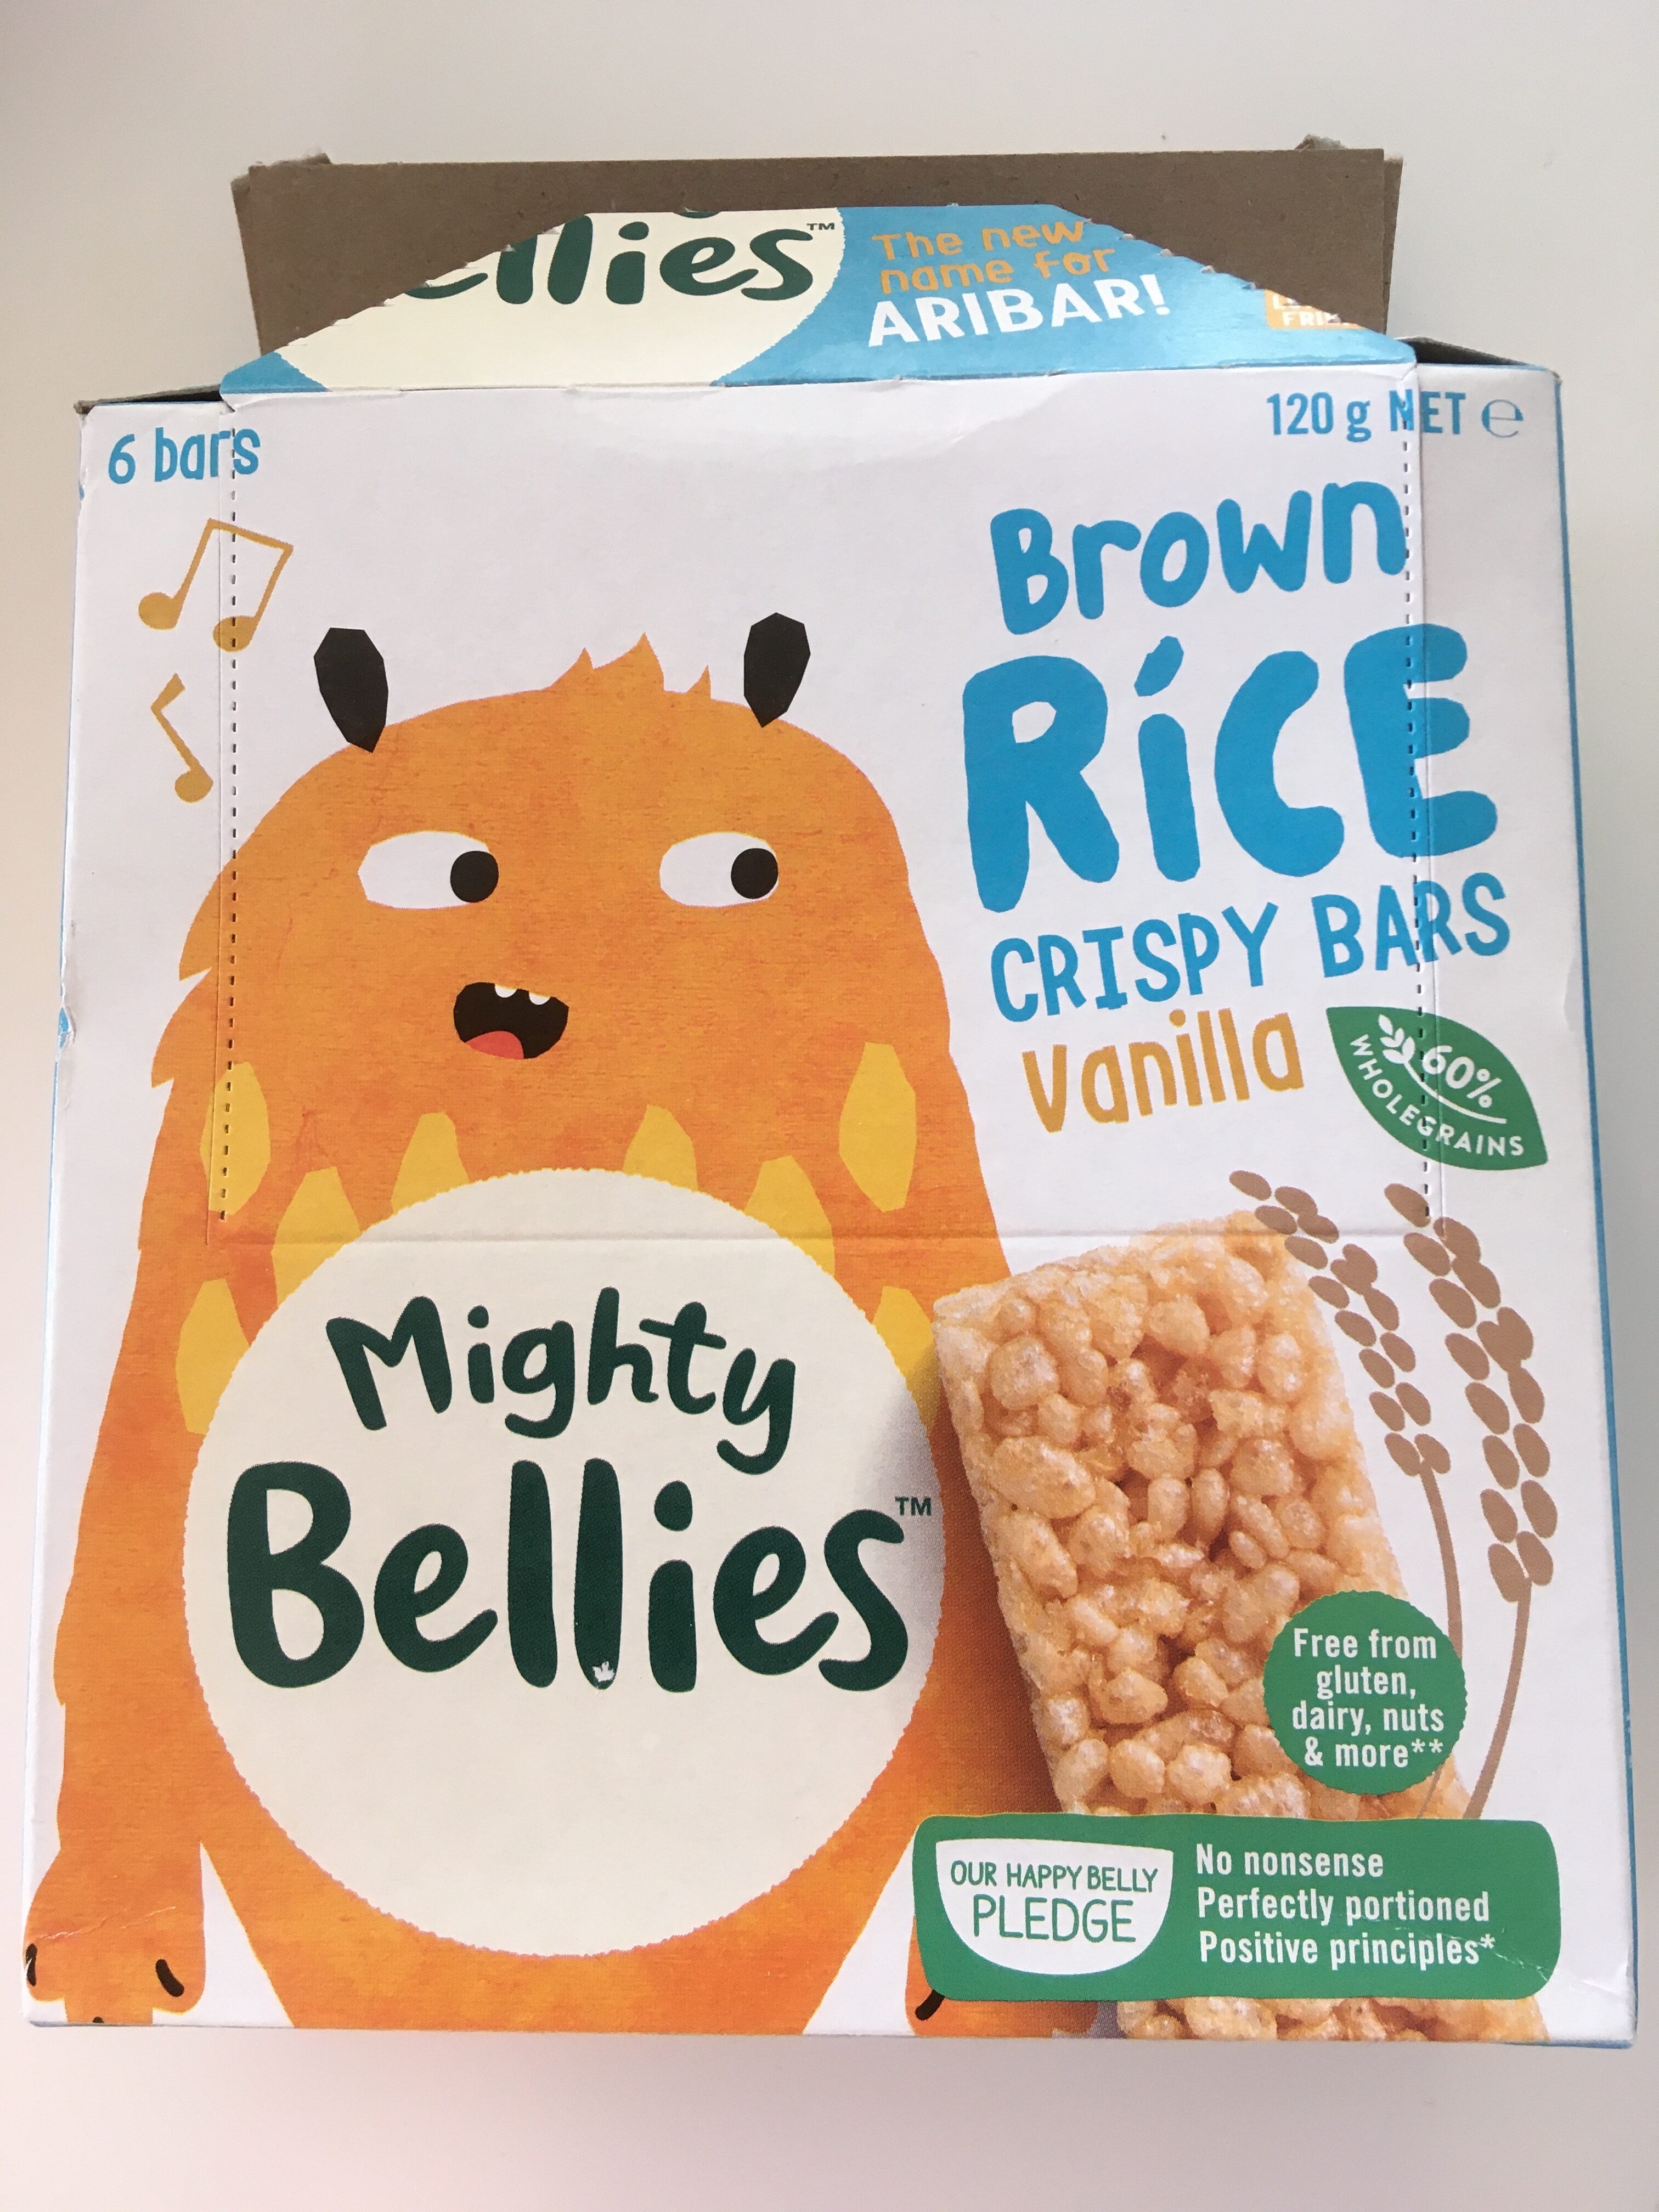 Brown rice crispy bars vanilla - Product - en